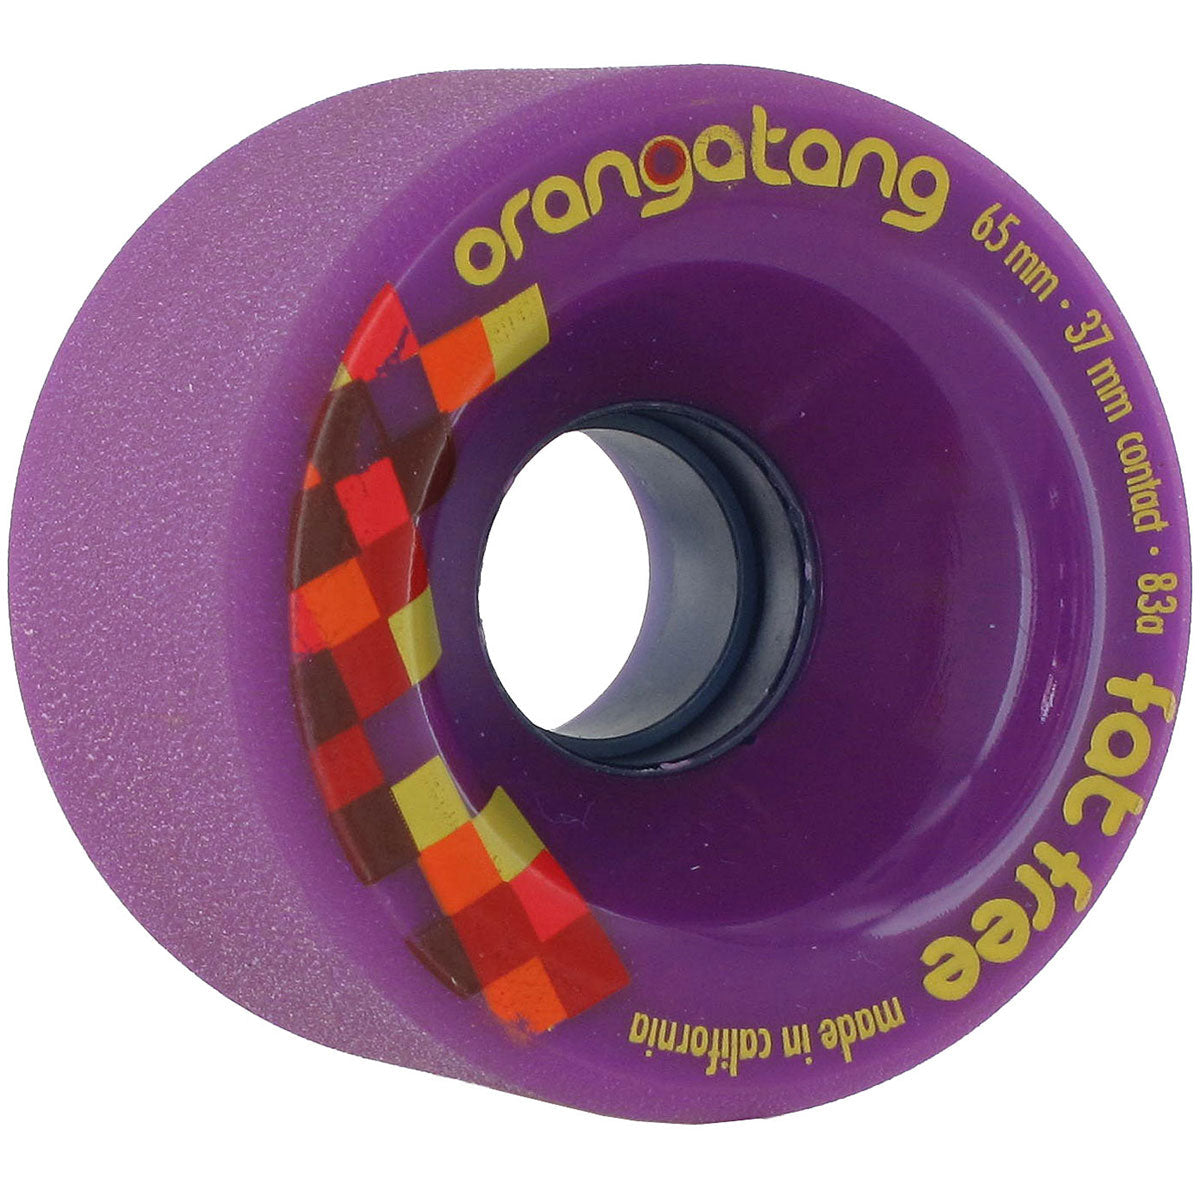 Orangatang Fat Free Freeride Longboard Wheels 65mm 83a Purple image 1